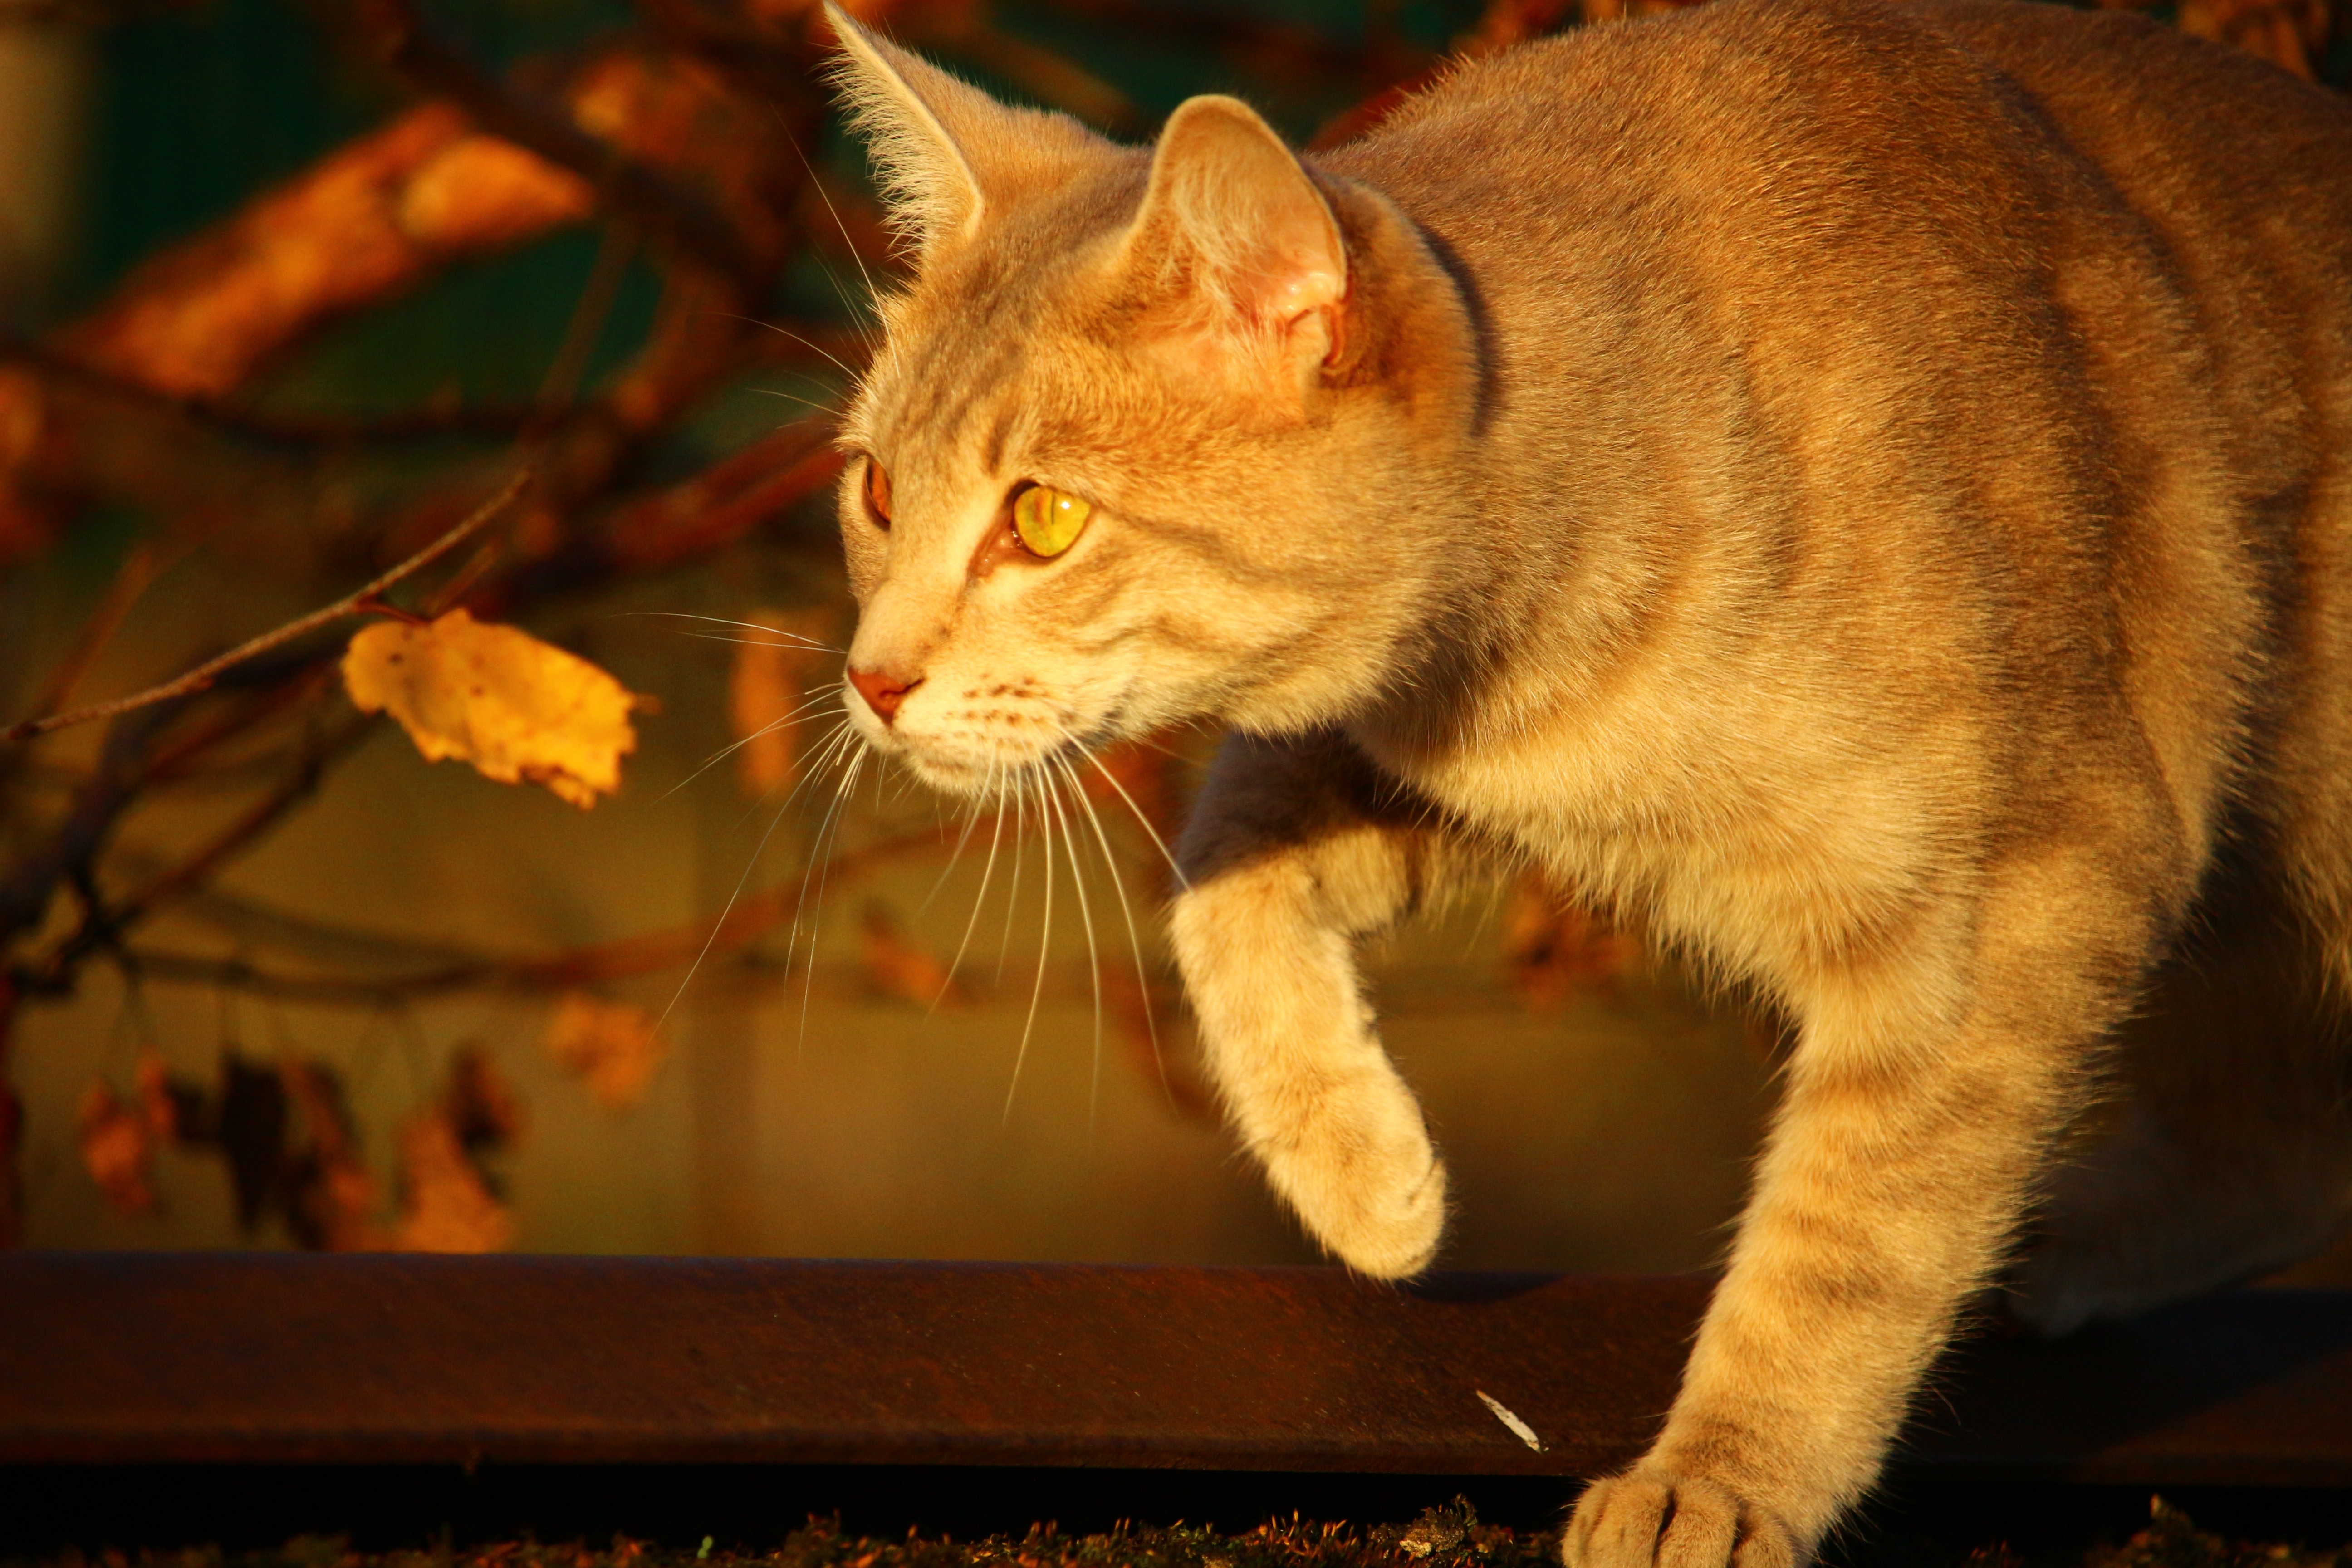 Cat, Autumn, Evening Light, Fall Foliage, domestic cat, pets